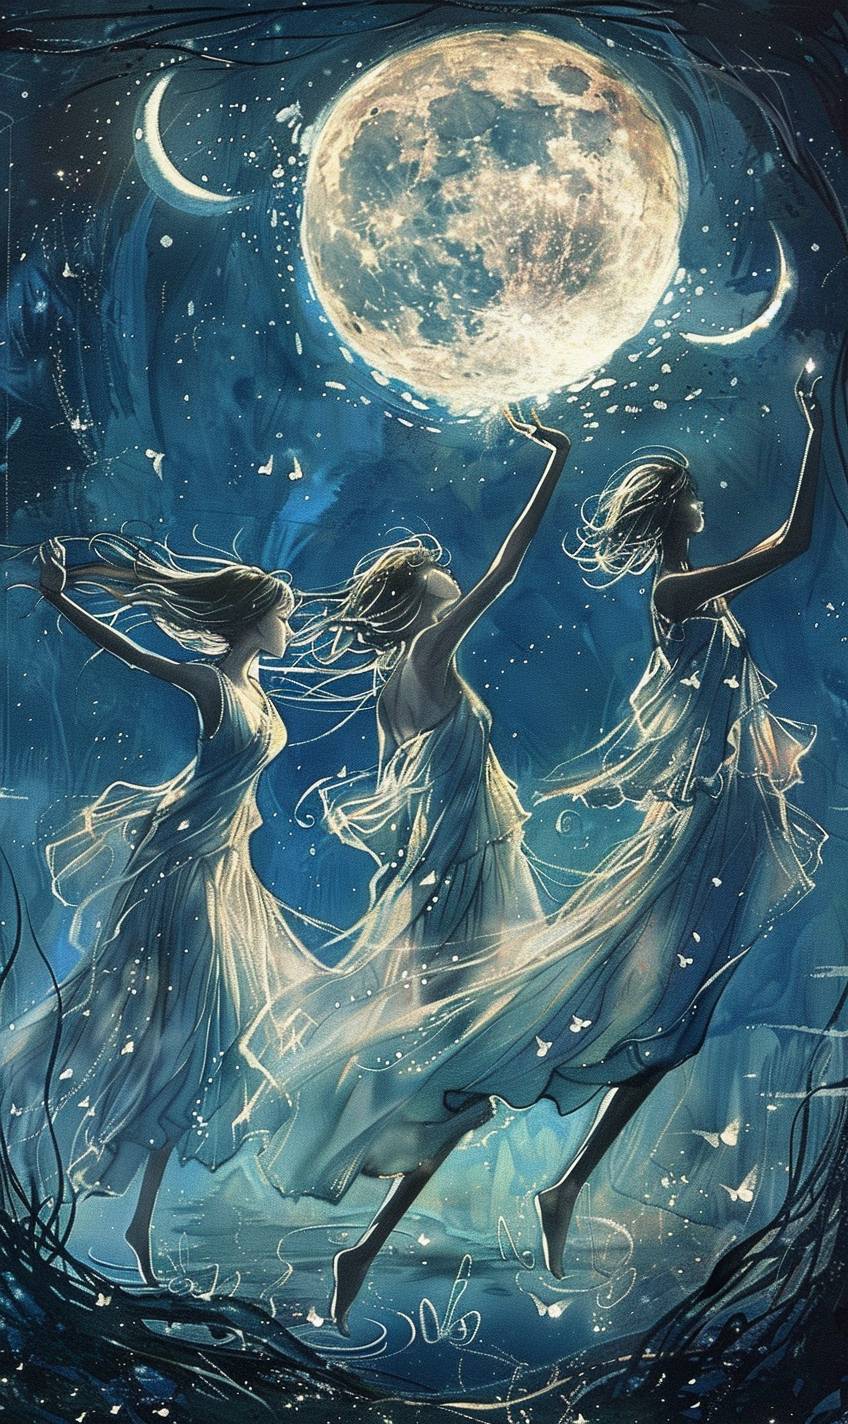 in style of Hajime Sorayama, Ethereal beings dancing under the moonlight